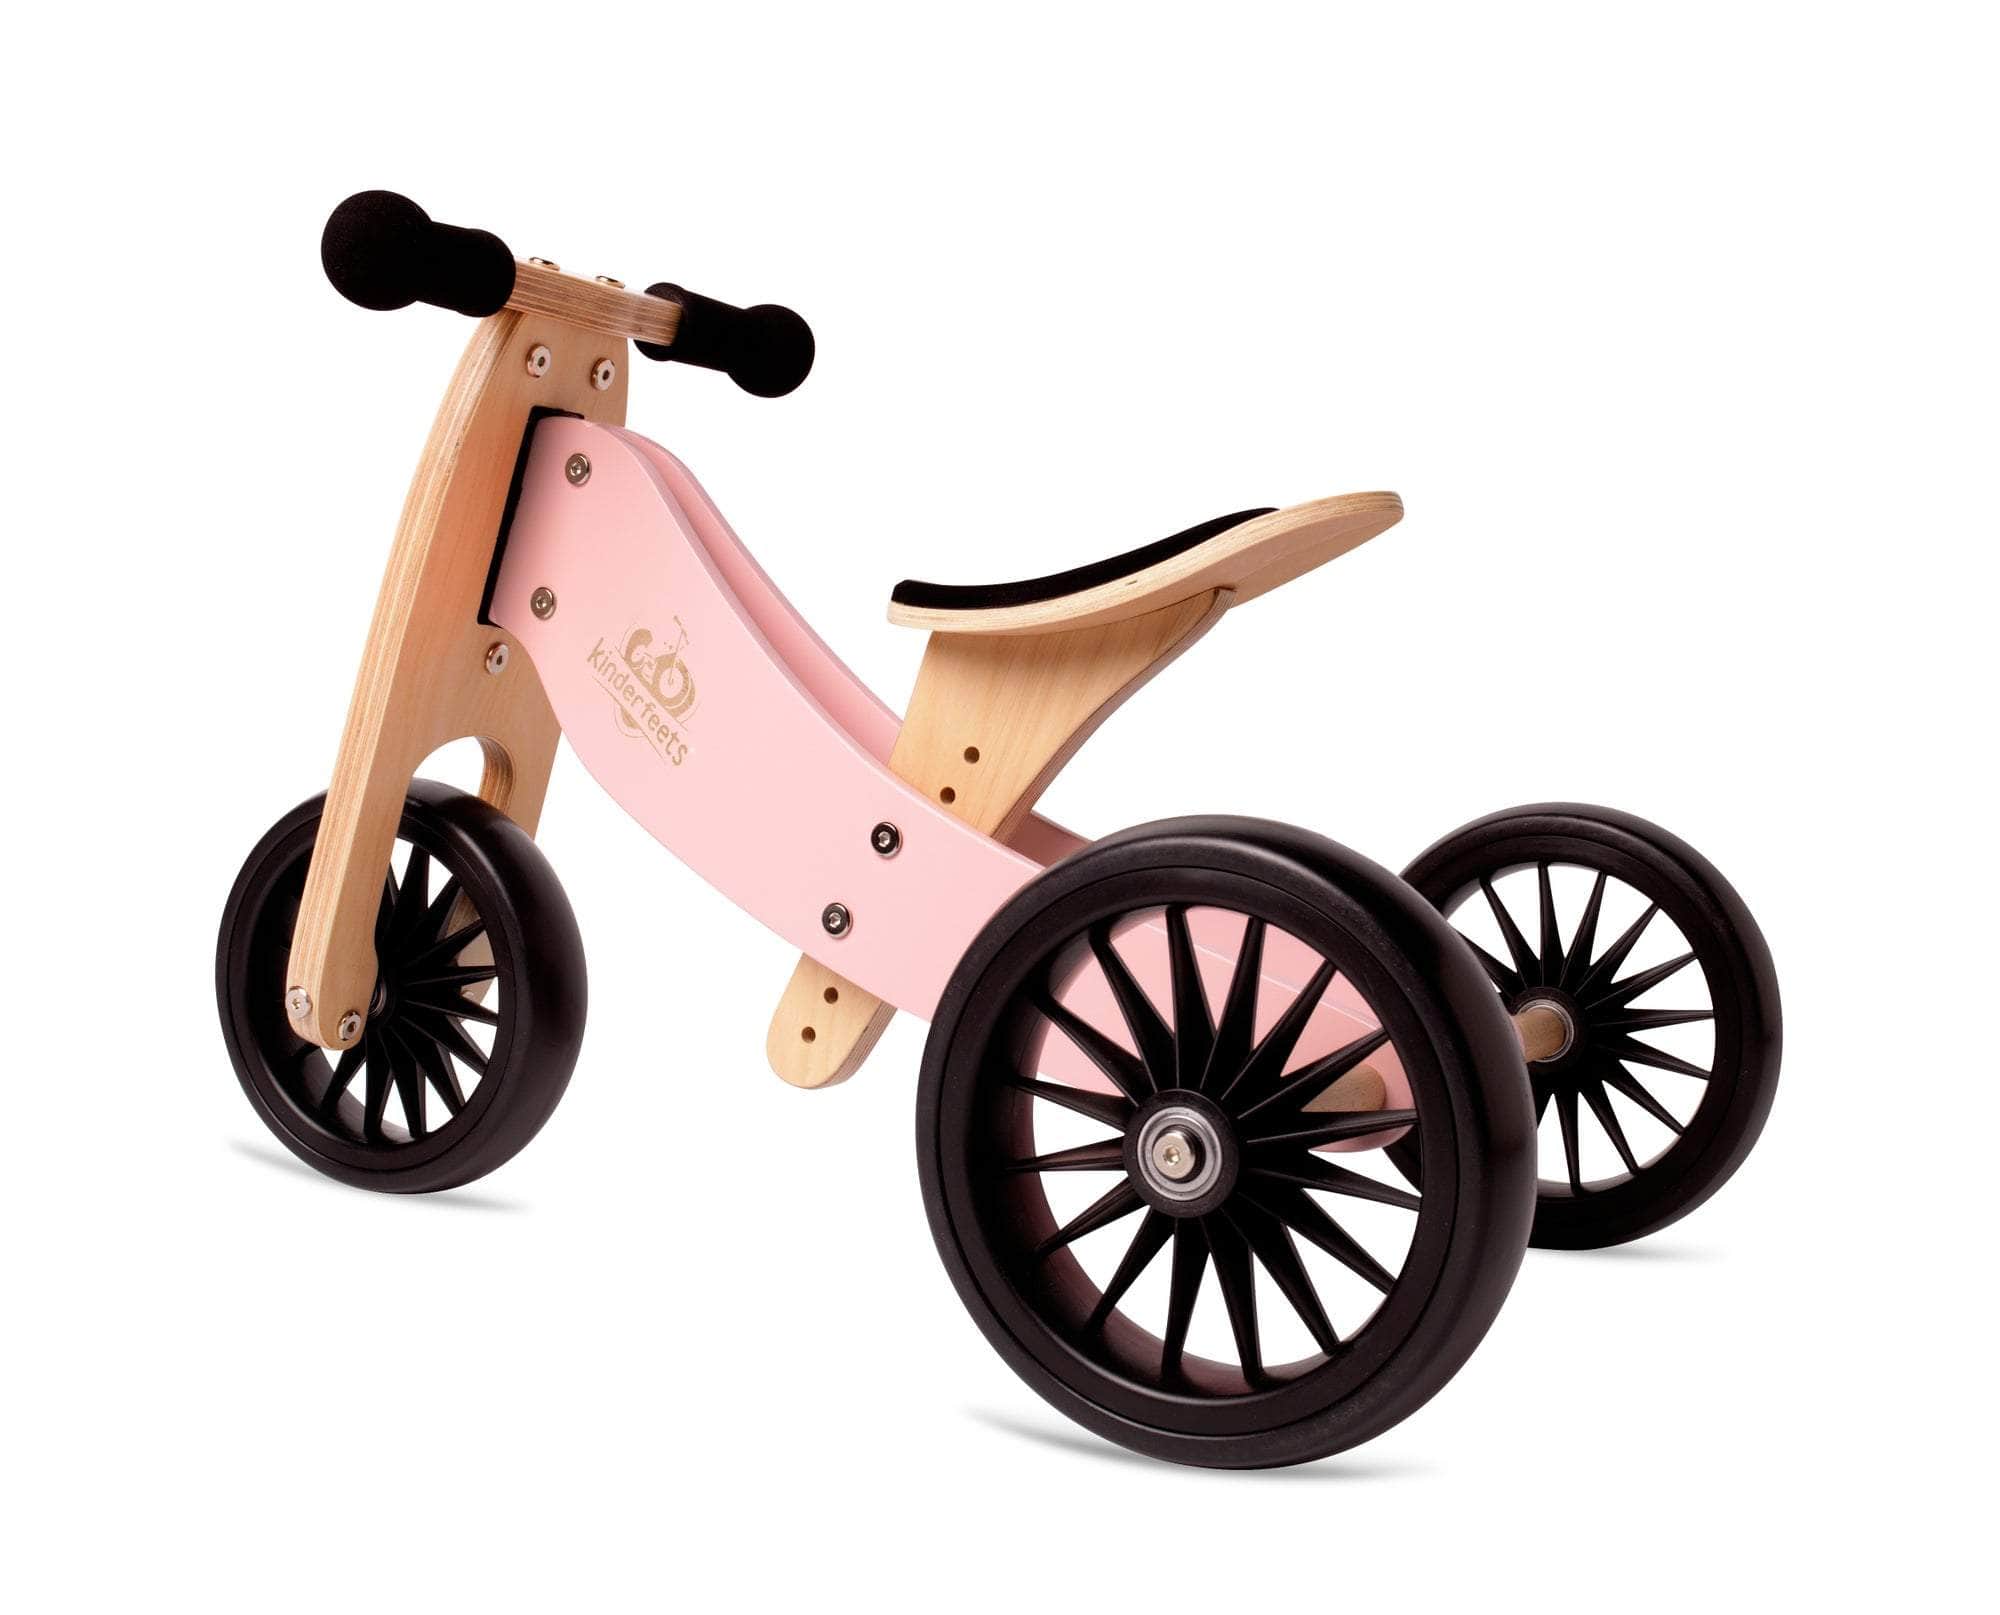 wooden push bike